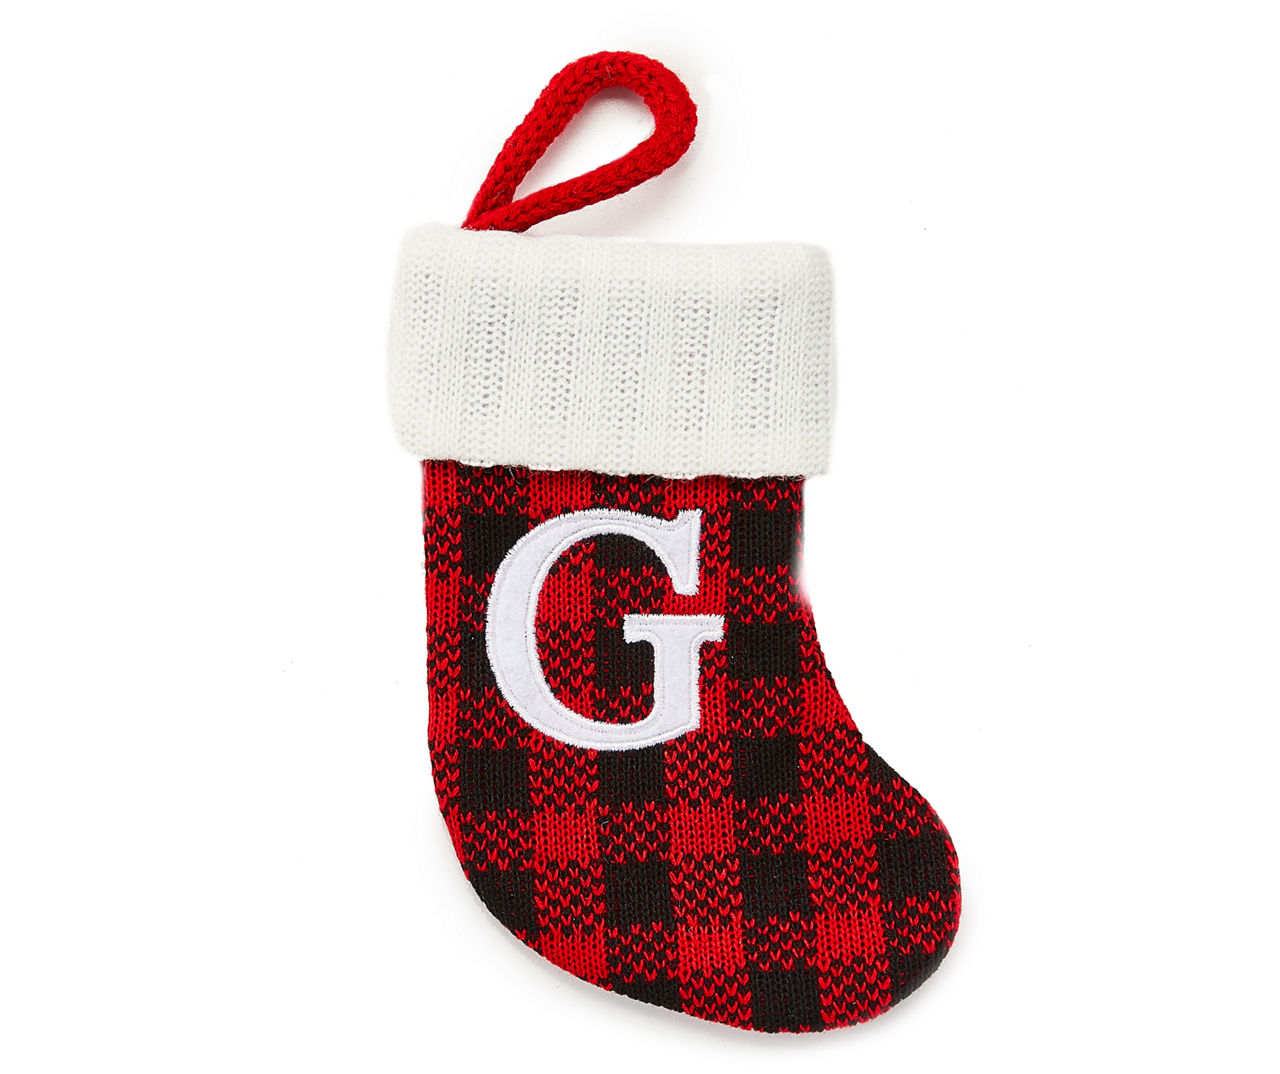 "G" Monogram Red Buffalo Check Mini Stocking with White Trim